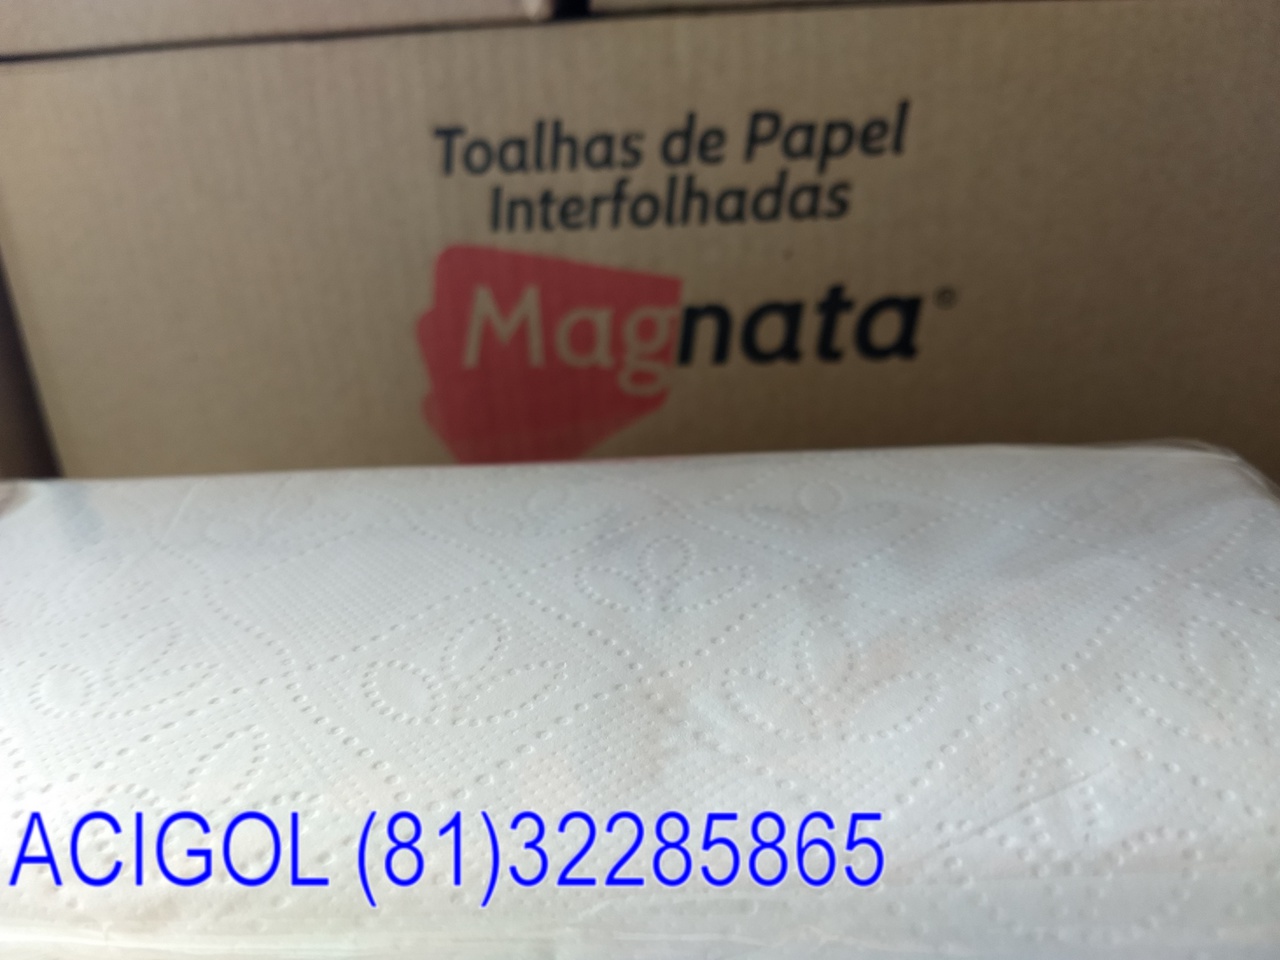 PAPEL TOALHA INTERFOLHA MAGNATA 2400 FOLHAS DOLHAS-ACIGOL RECIFE 81 32285865-IMG_20181214_085348913